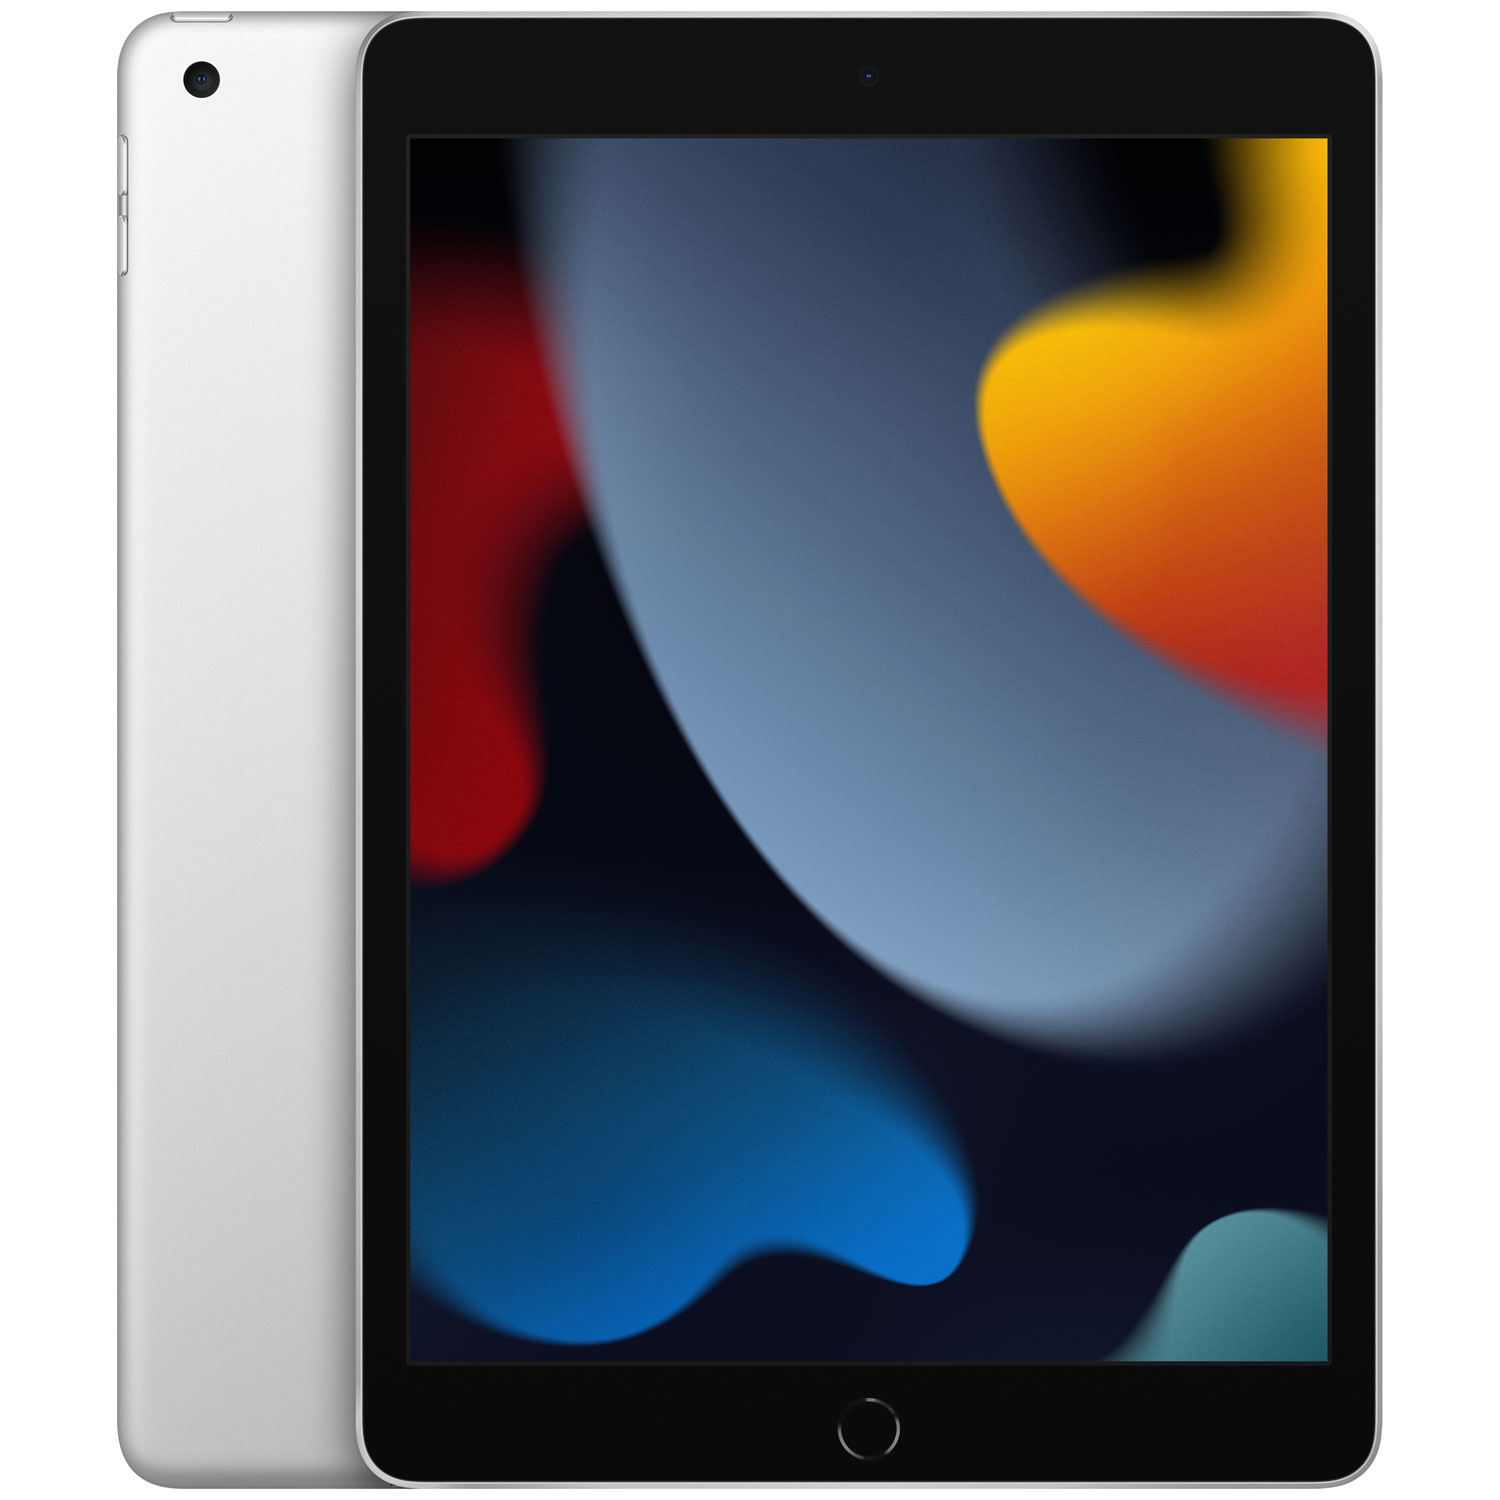 Apple iPad 10.2" 64GB with Wi-Fi (9th Generation) - Silver